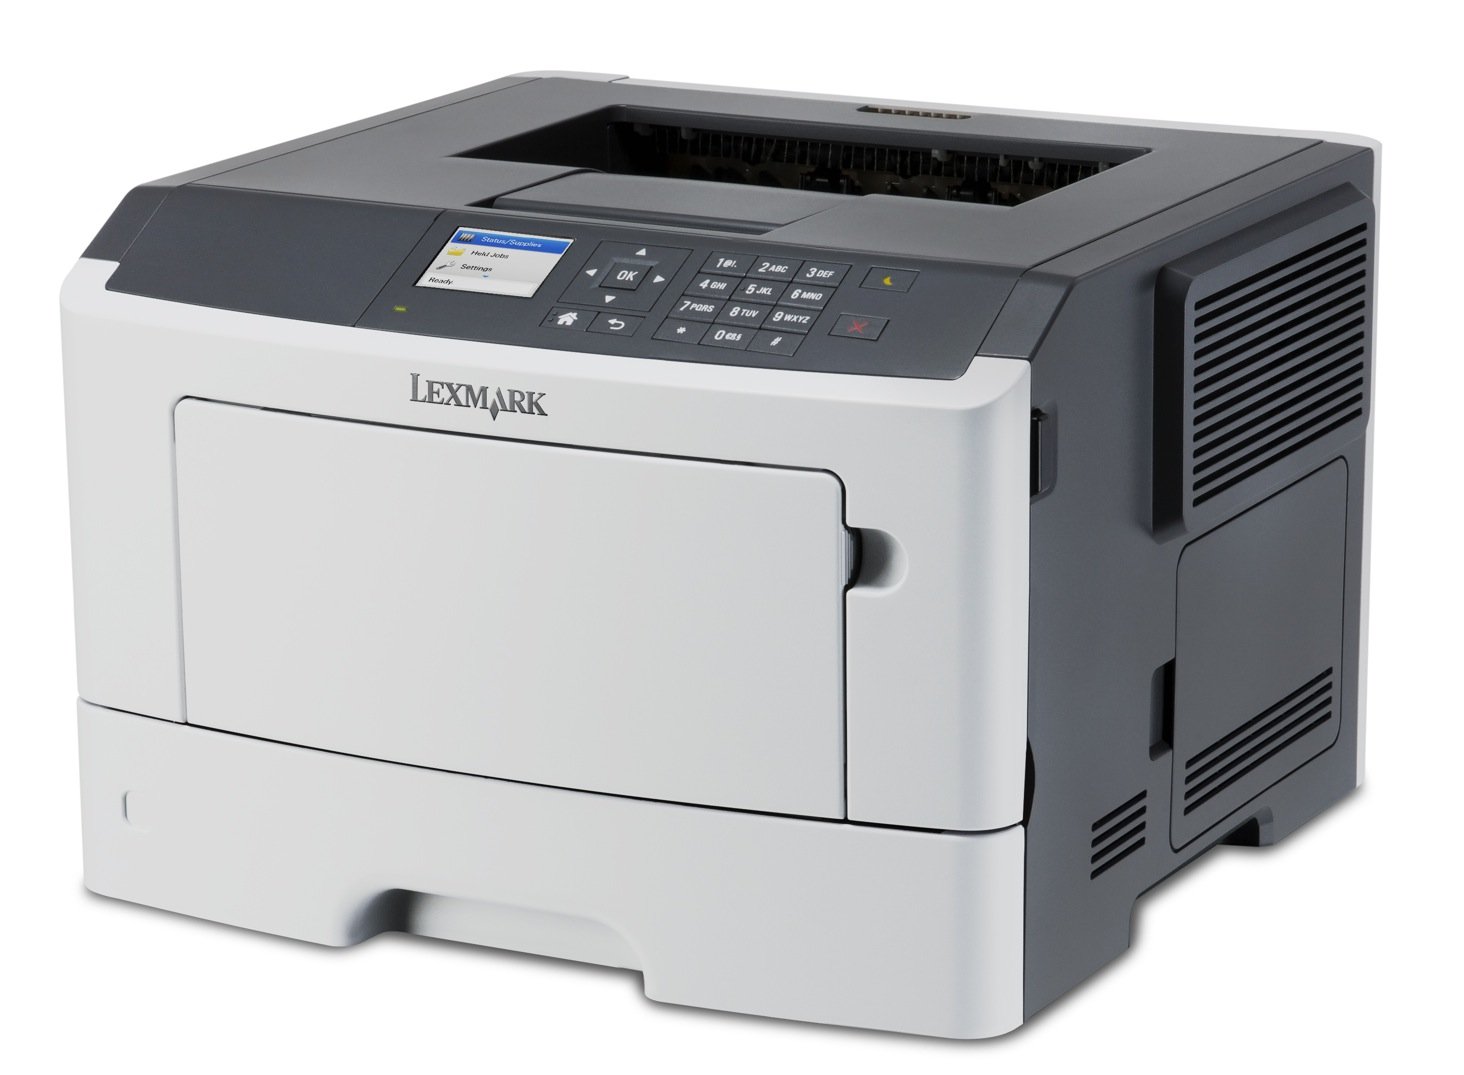 Lexmark MS417dn Compact Laser Printer, Monochrome, Networking, Duplex Printing